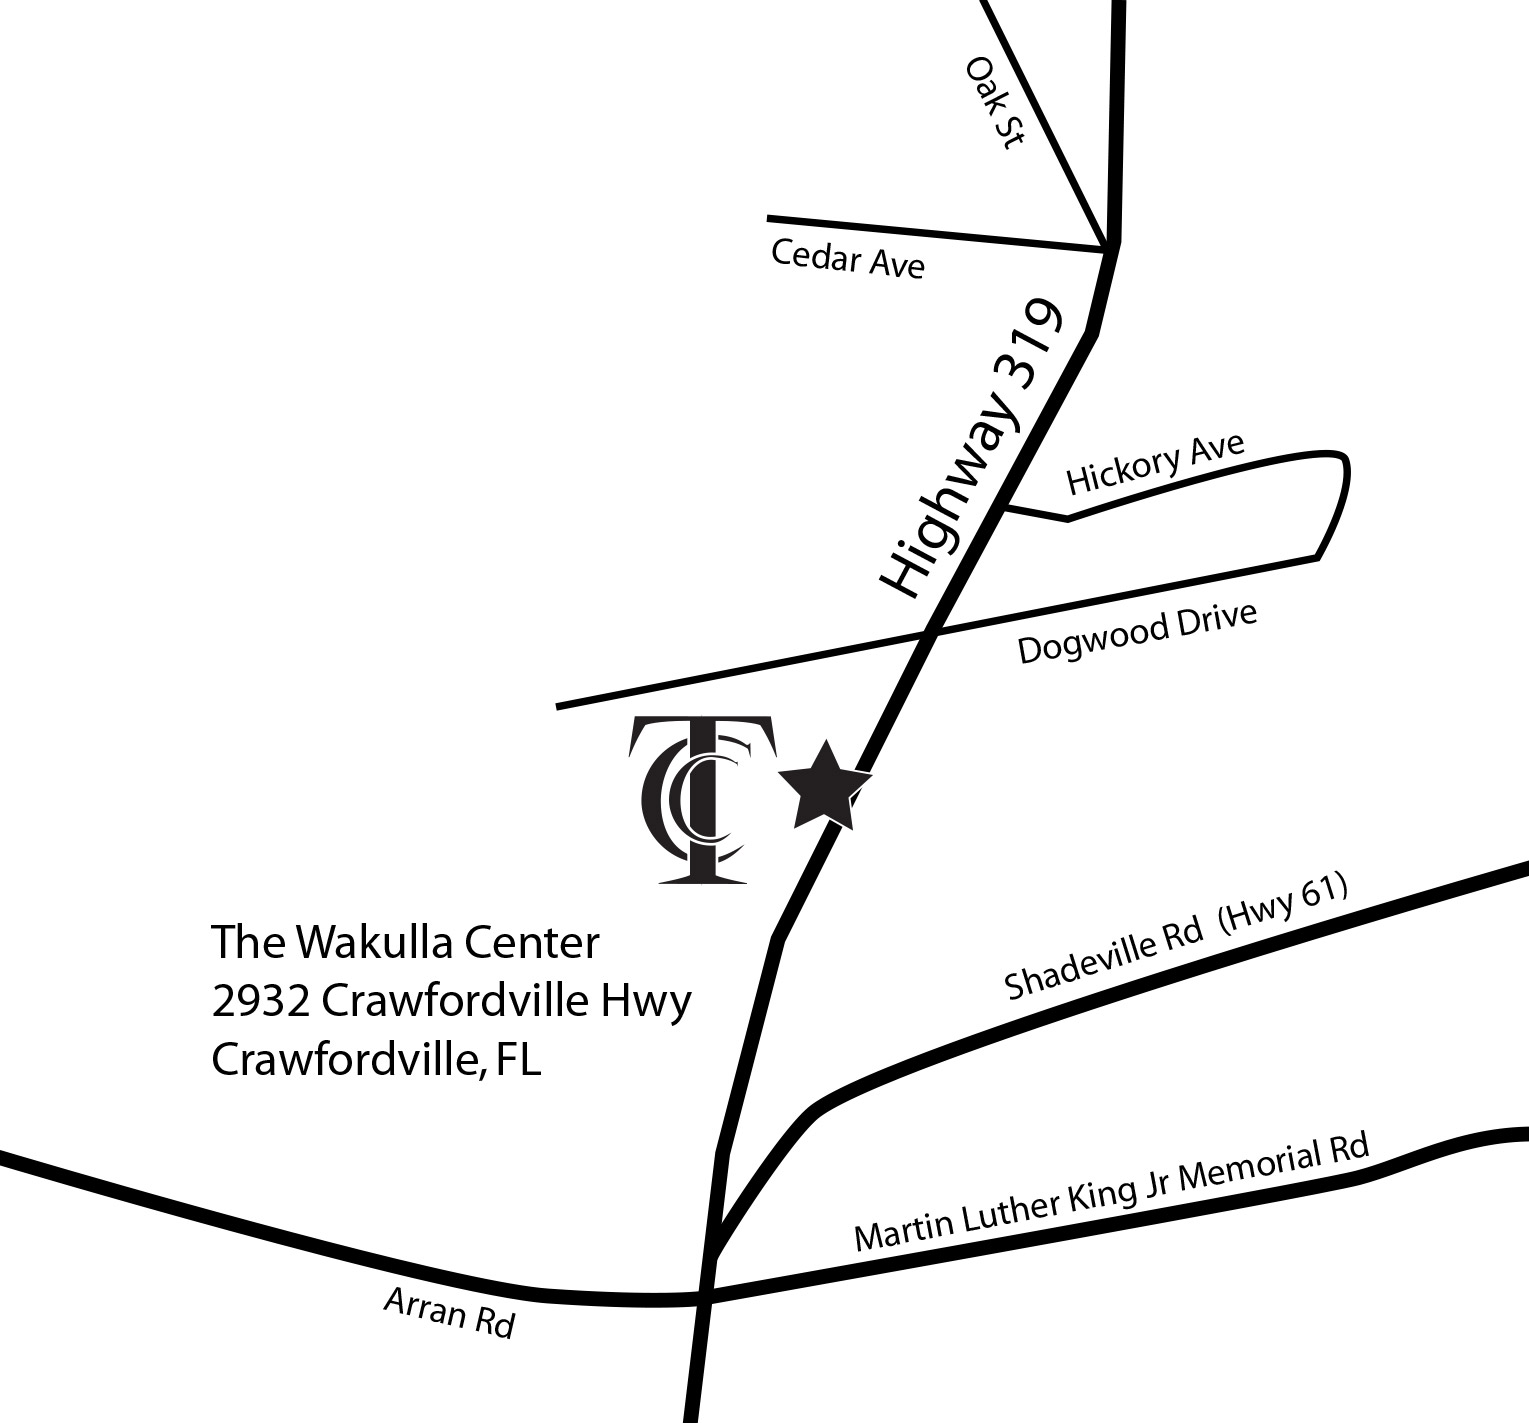 Map to TCC Wakulla Center